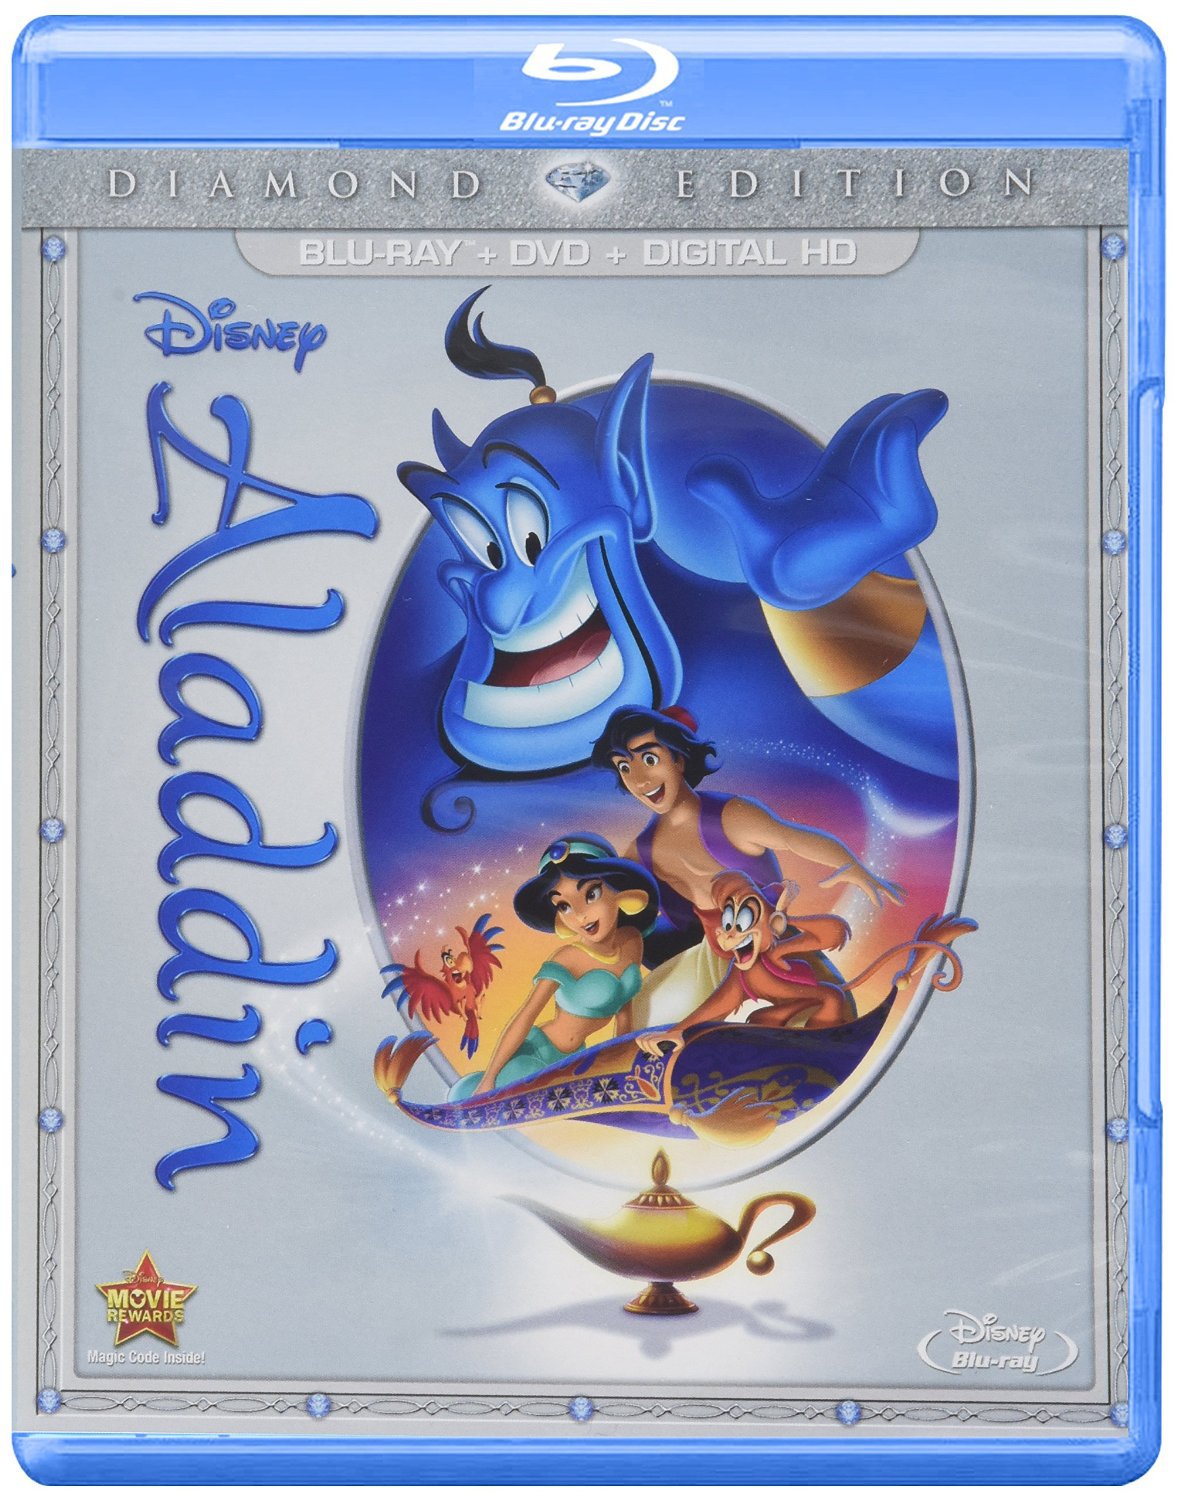 Aladdin: Diamond Edition